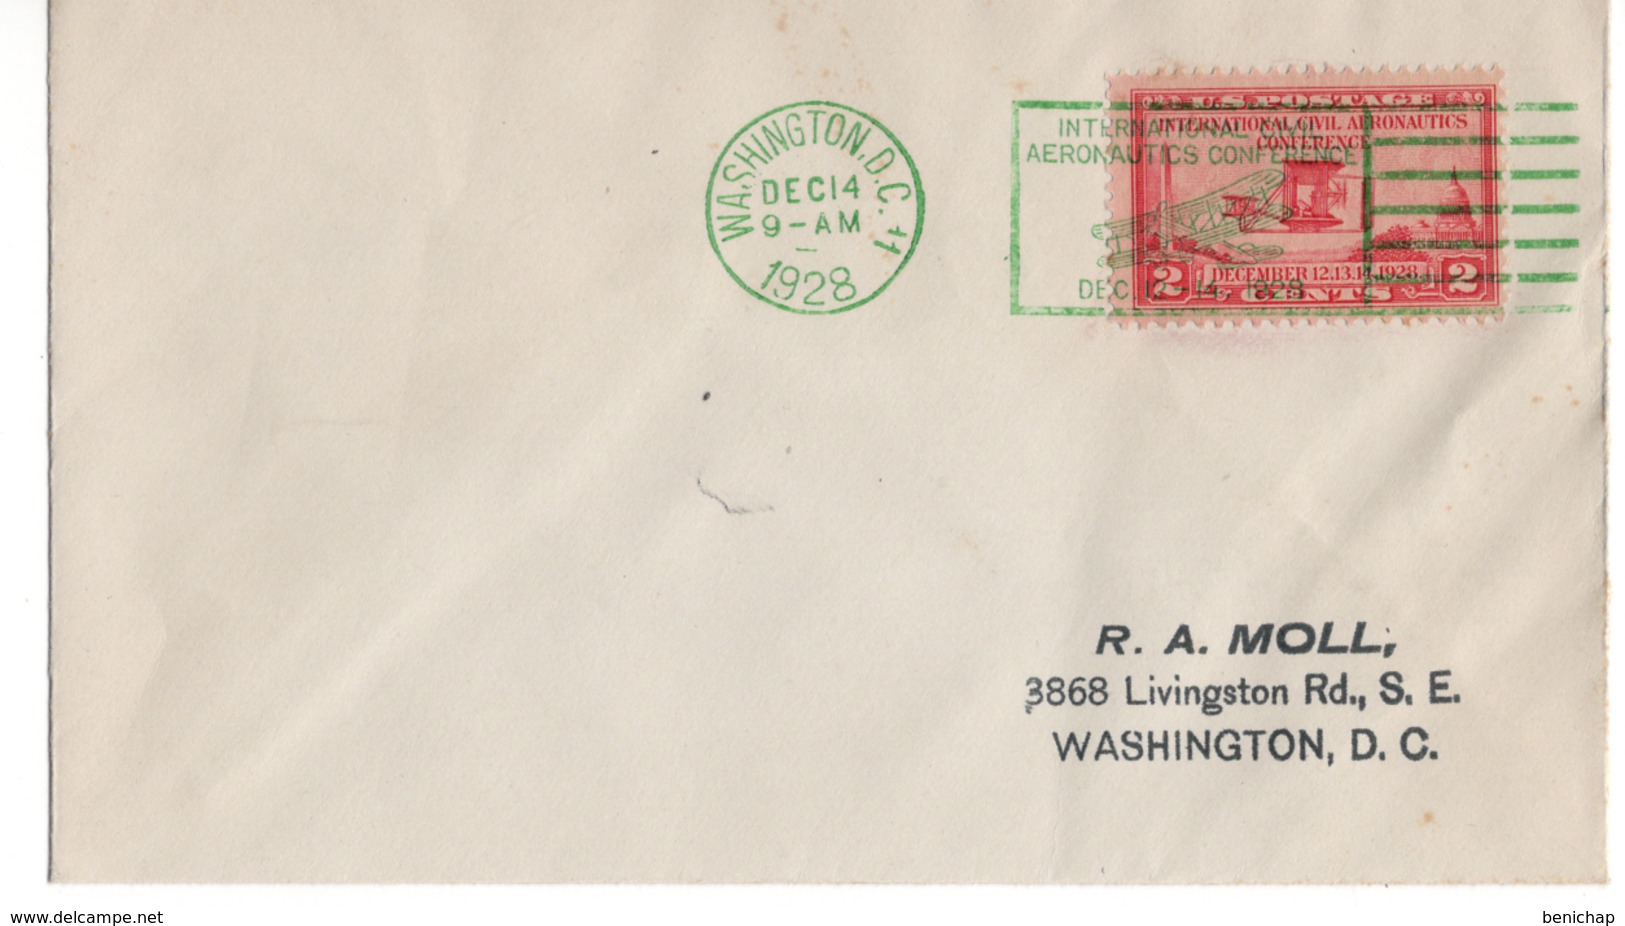 (R8) SCOTT 649 - AERONAUTICS CONFERENCE ISSUE - WRIGHT AIRPLANE - WASHINGTON D.C. - 1928 - GREEN CANCELLATION. - FDC